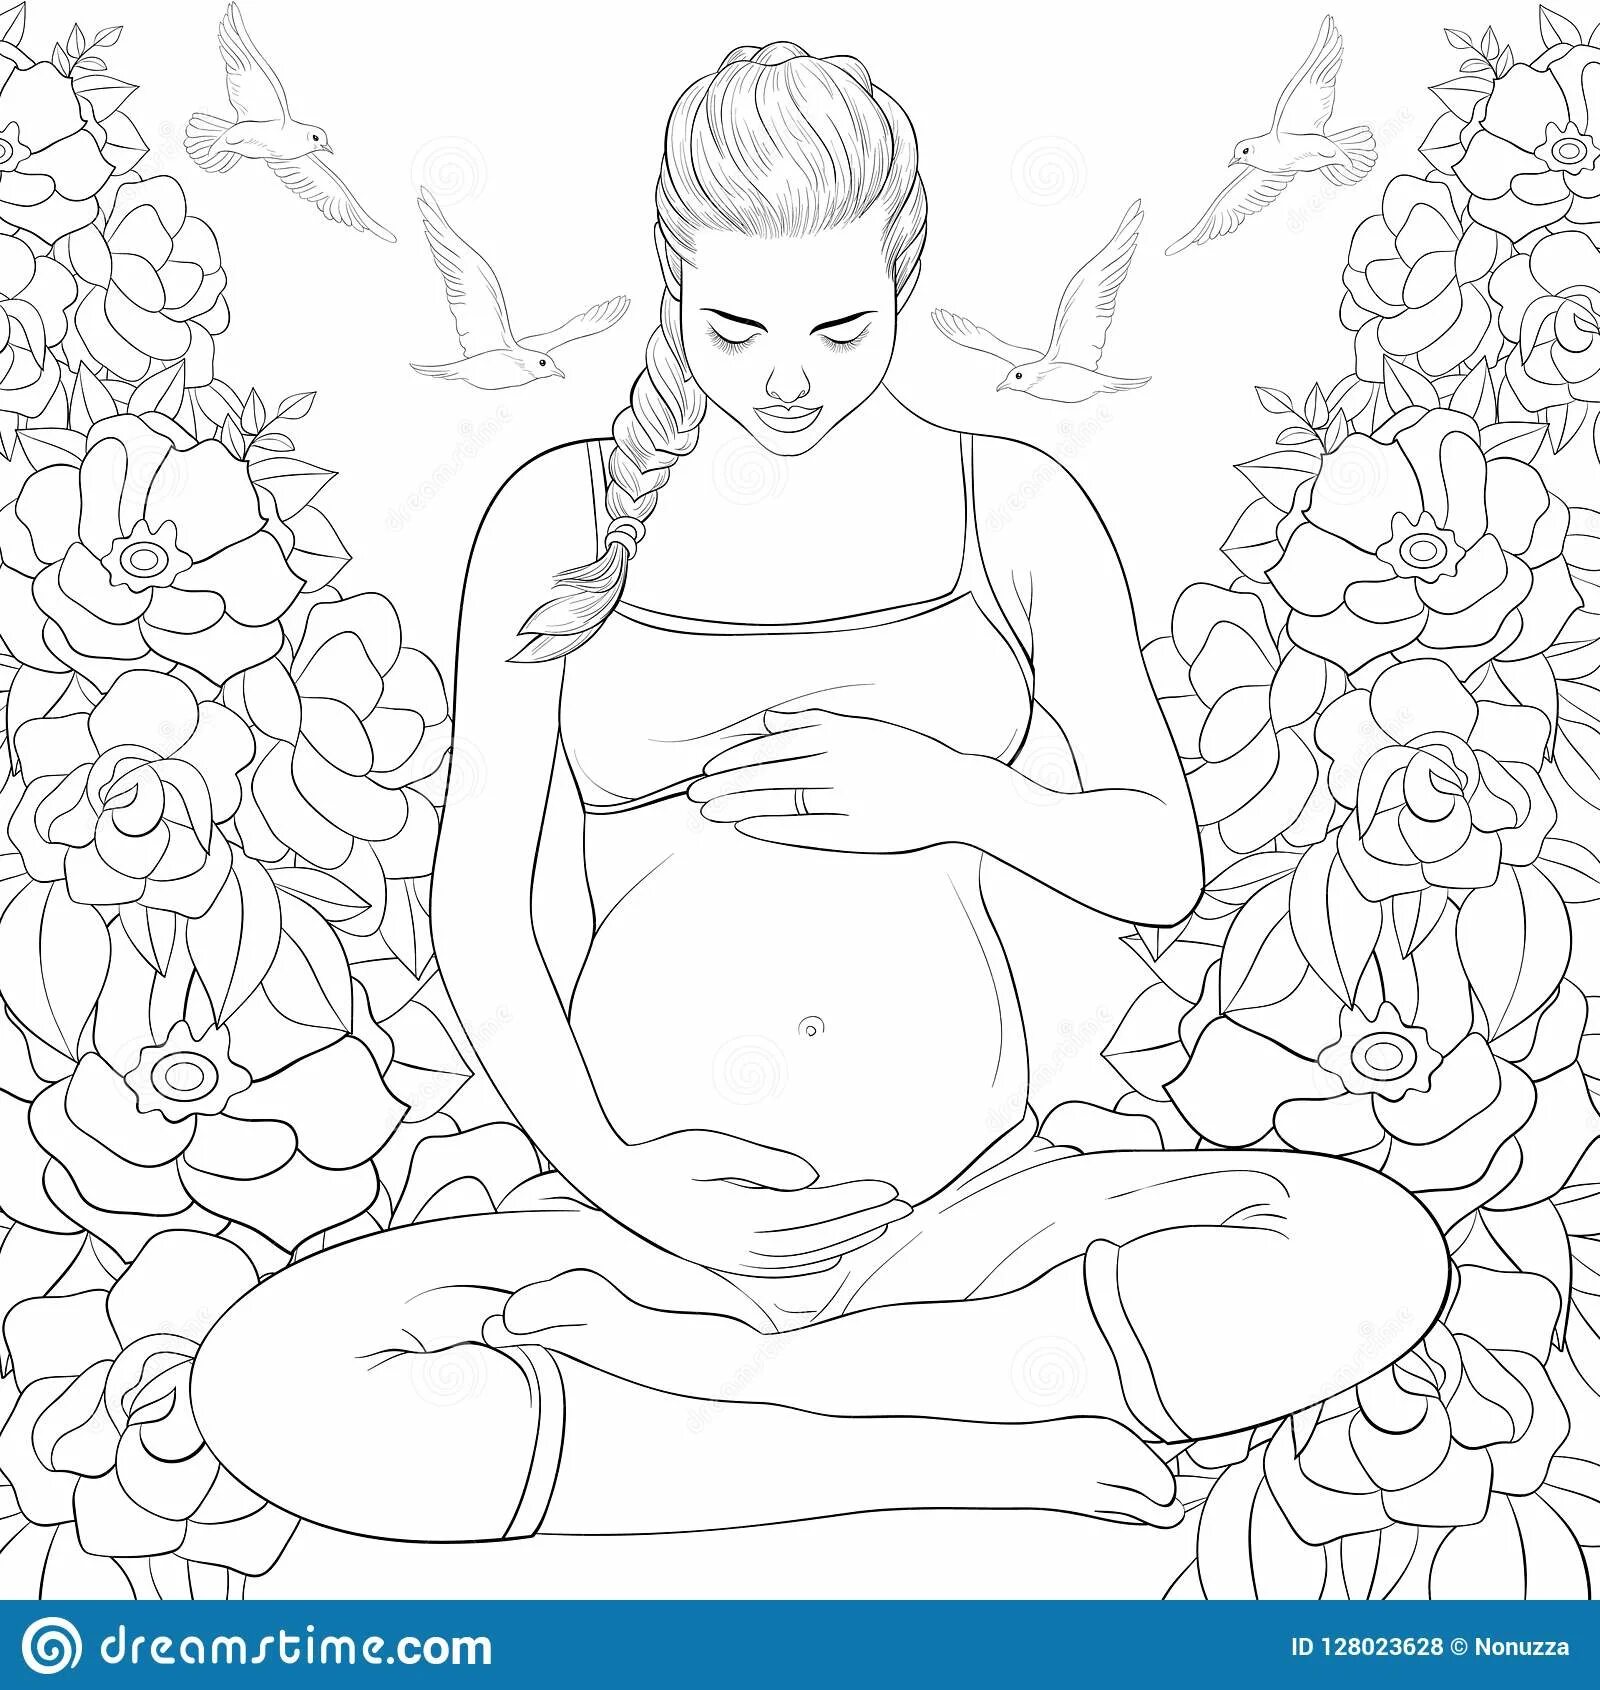 Fun coloring book for pregnant women